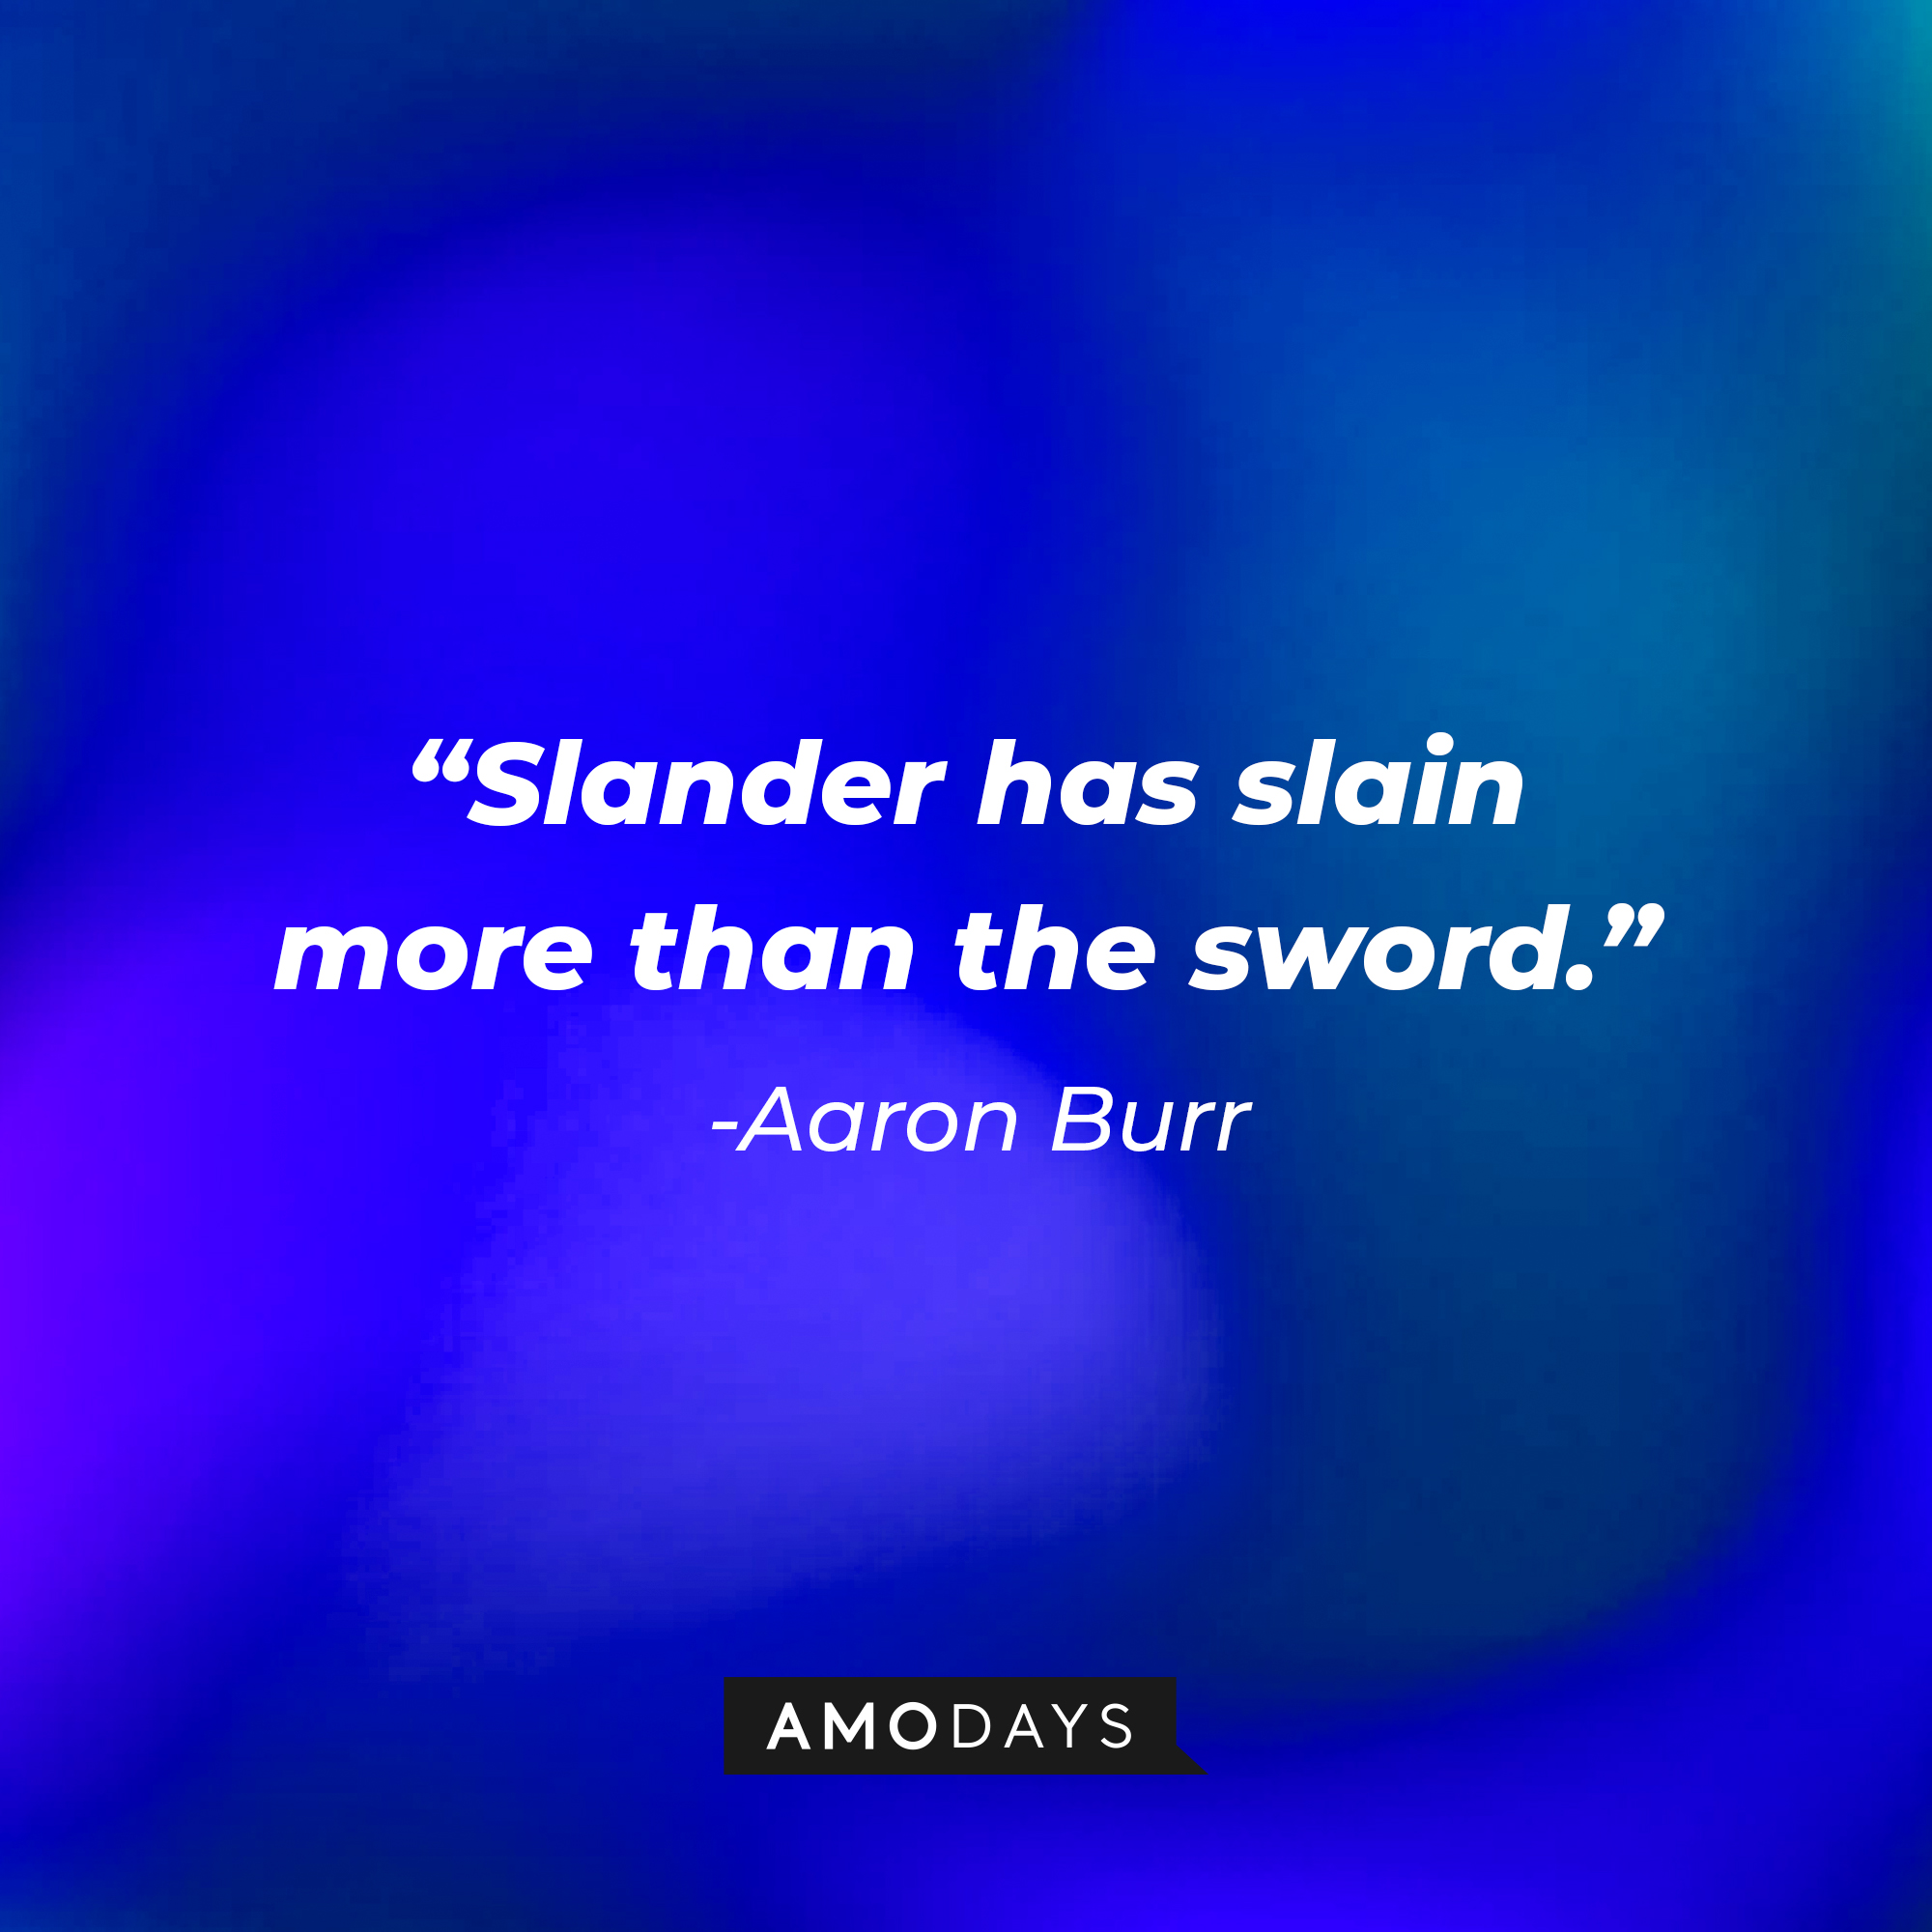 Aaron Burr’s quote: “Slander has slain more than the sword.” | Source: AmoDays